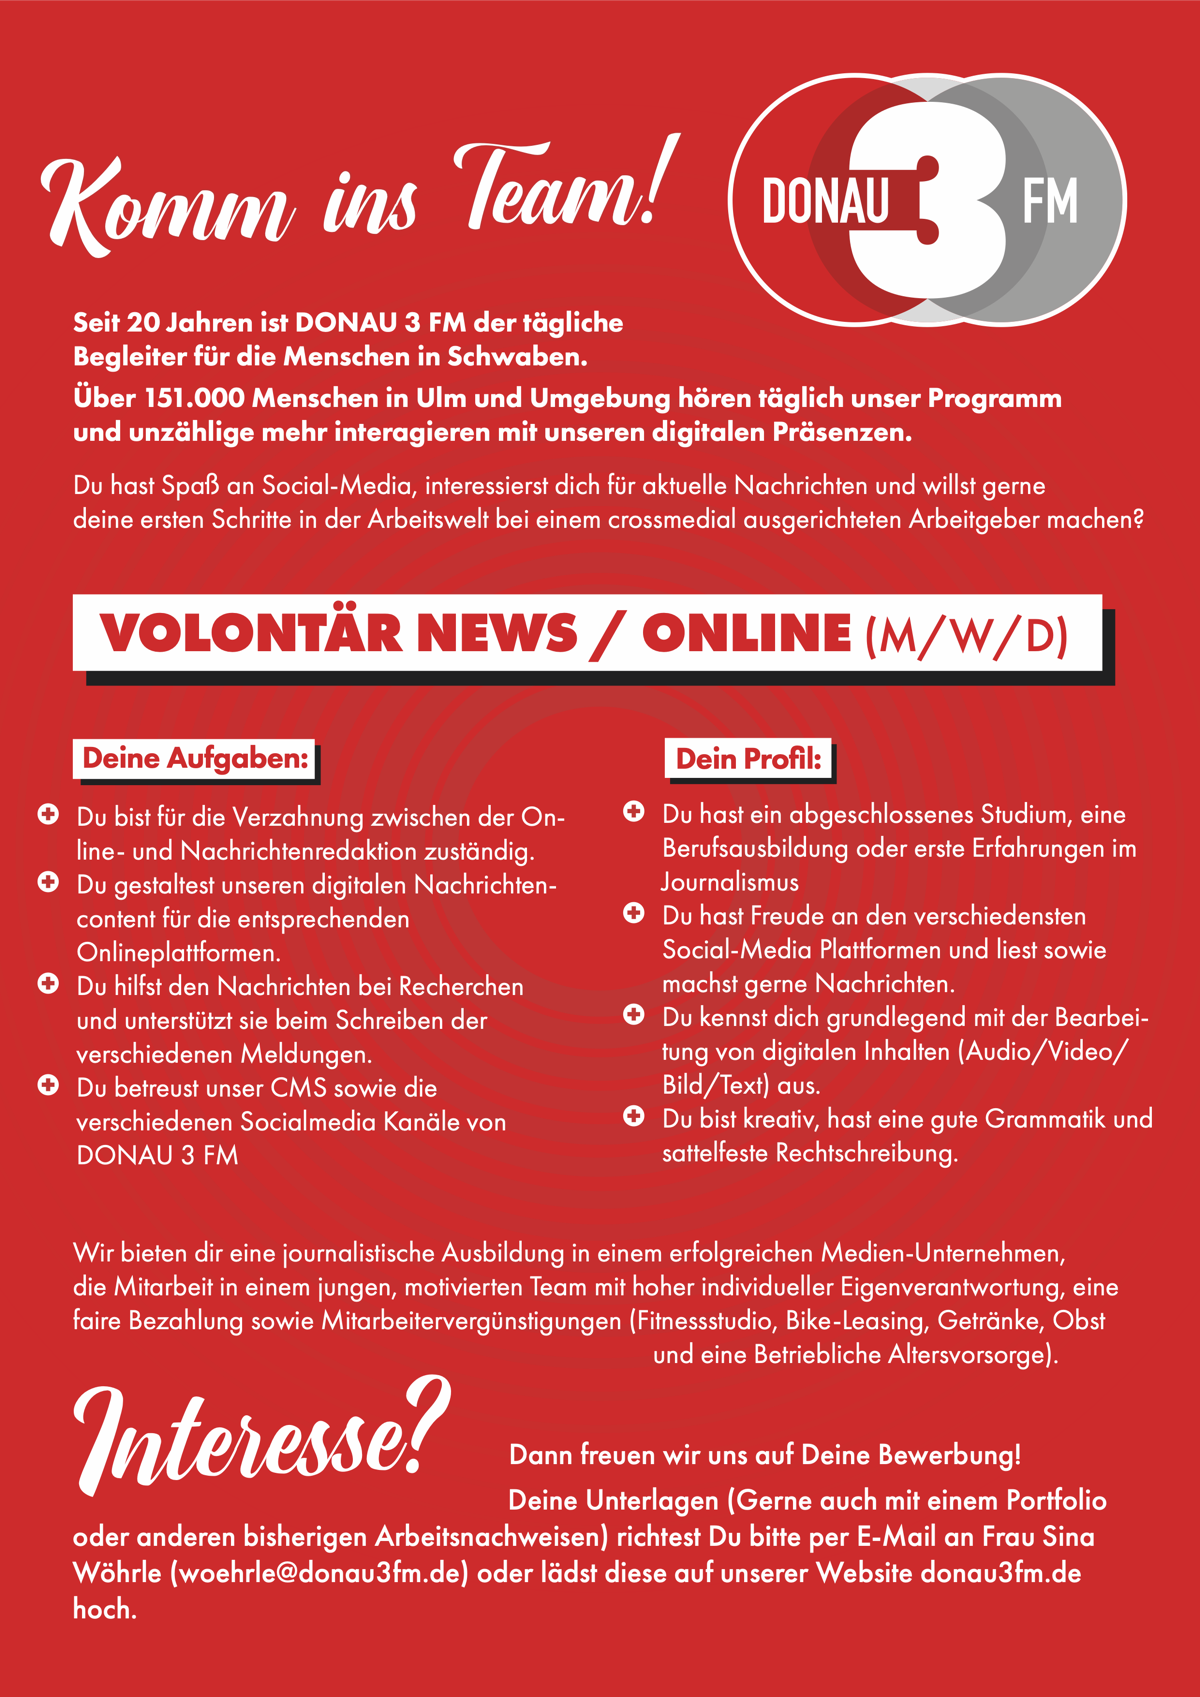 DONAU 3 FM sucht Volontär News / Online (m/w/d)